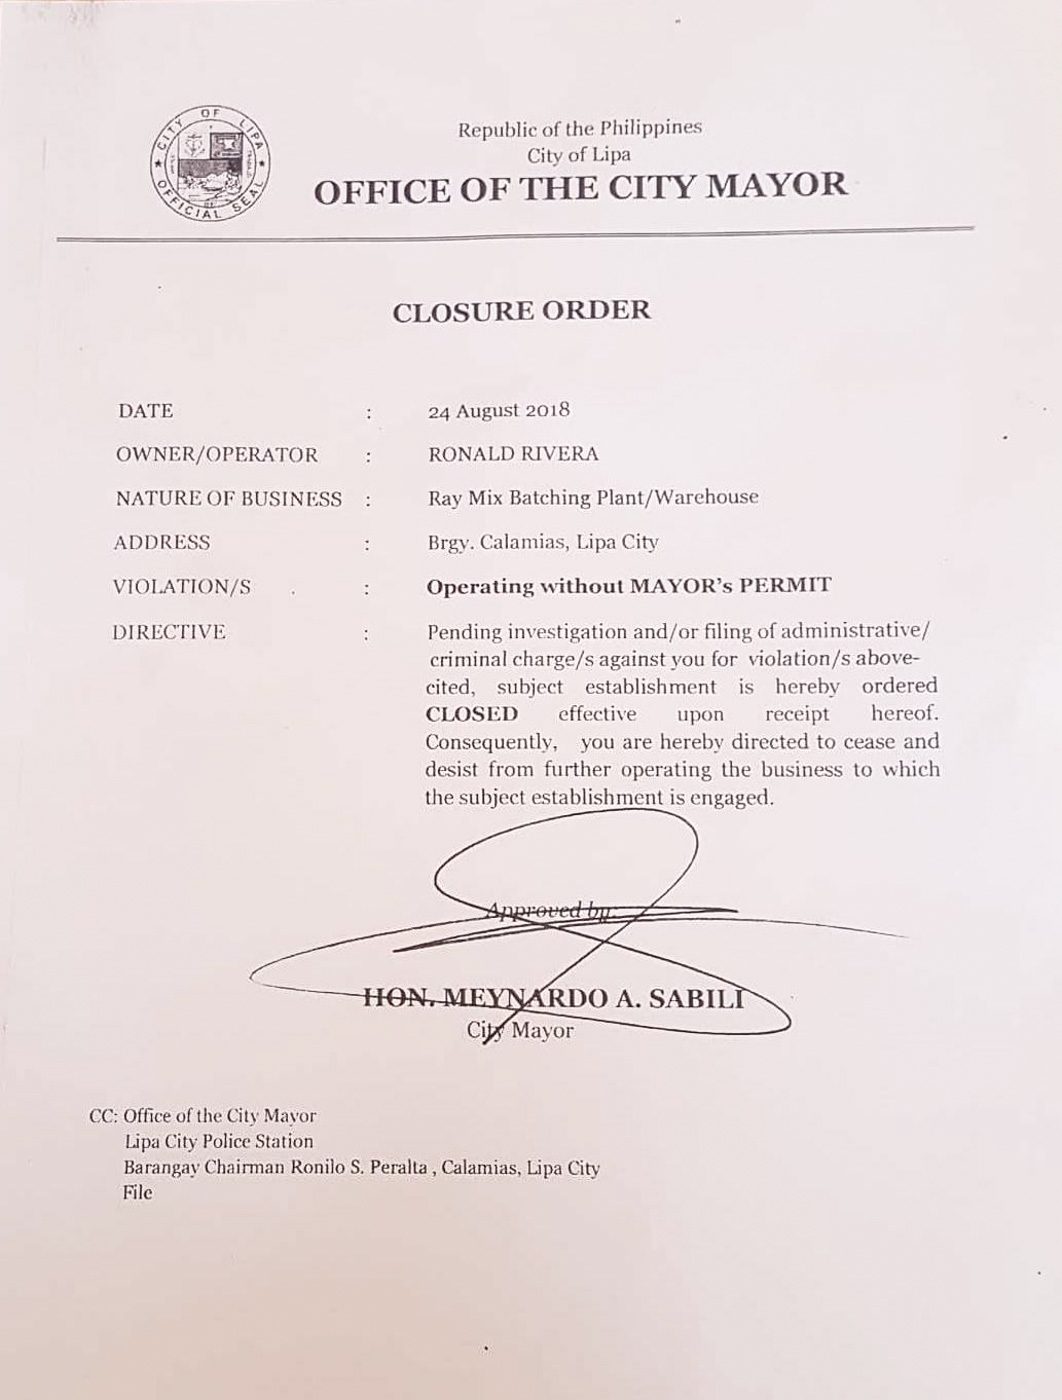 CLOSURE ORDER. RY Saligvera has defied the closure order signed by Mayor Meynard Sabili on August 24, 2018 